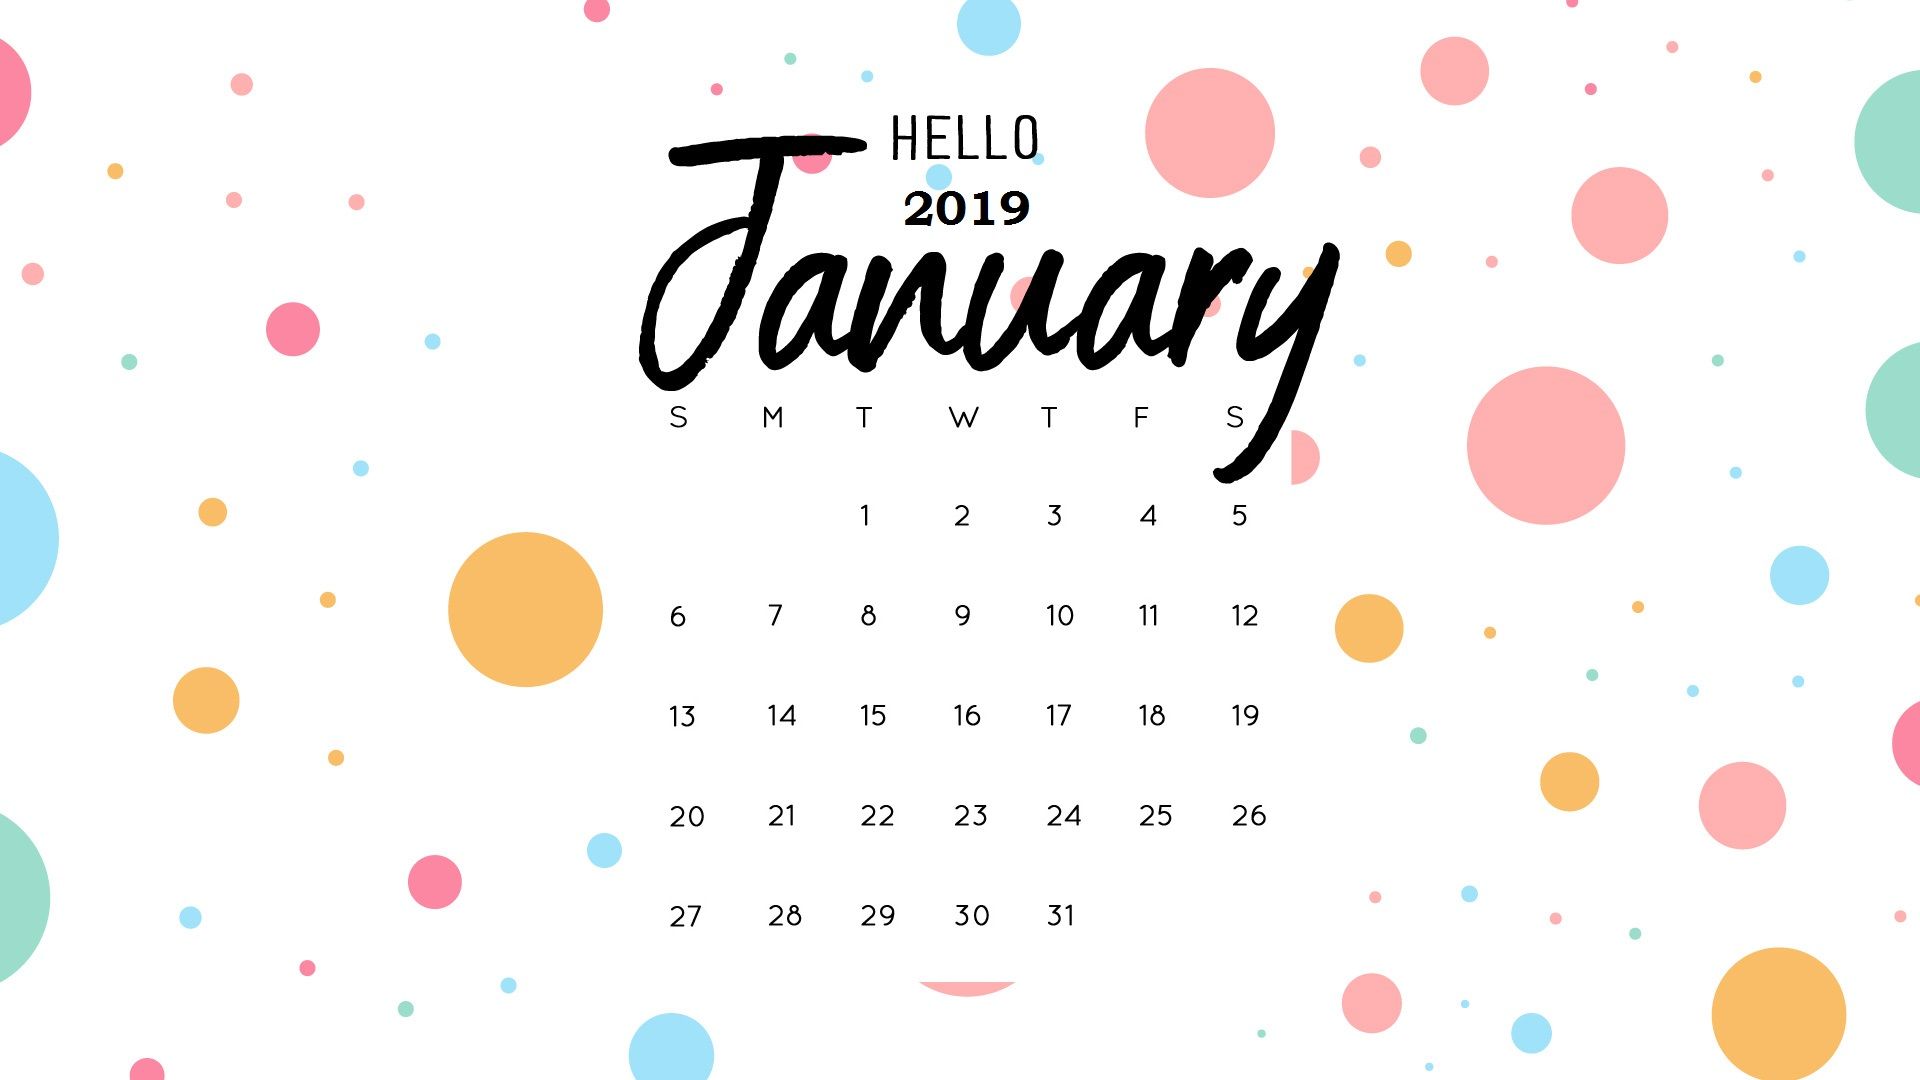 January 2019 Calendar Wallpaper Hd - January 2019 Desktop Calendar - HD Wallpaper 